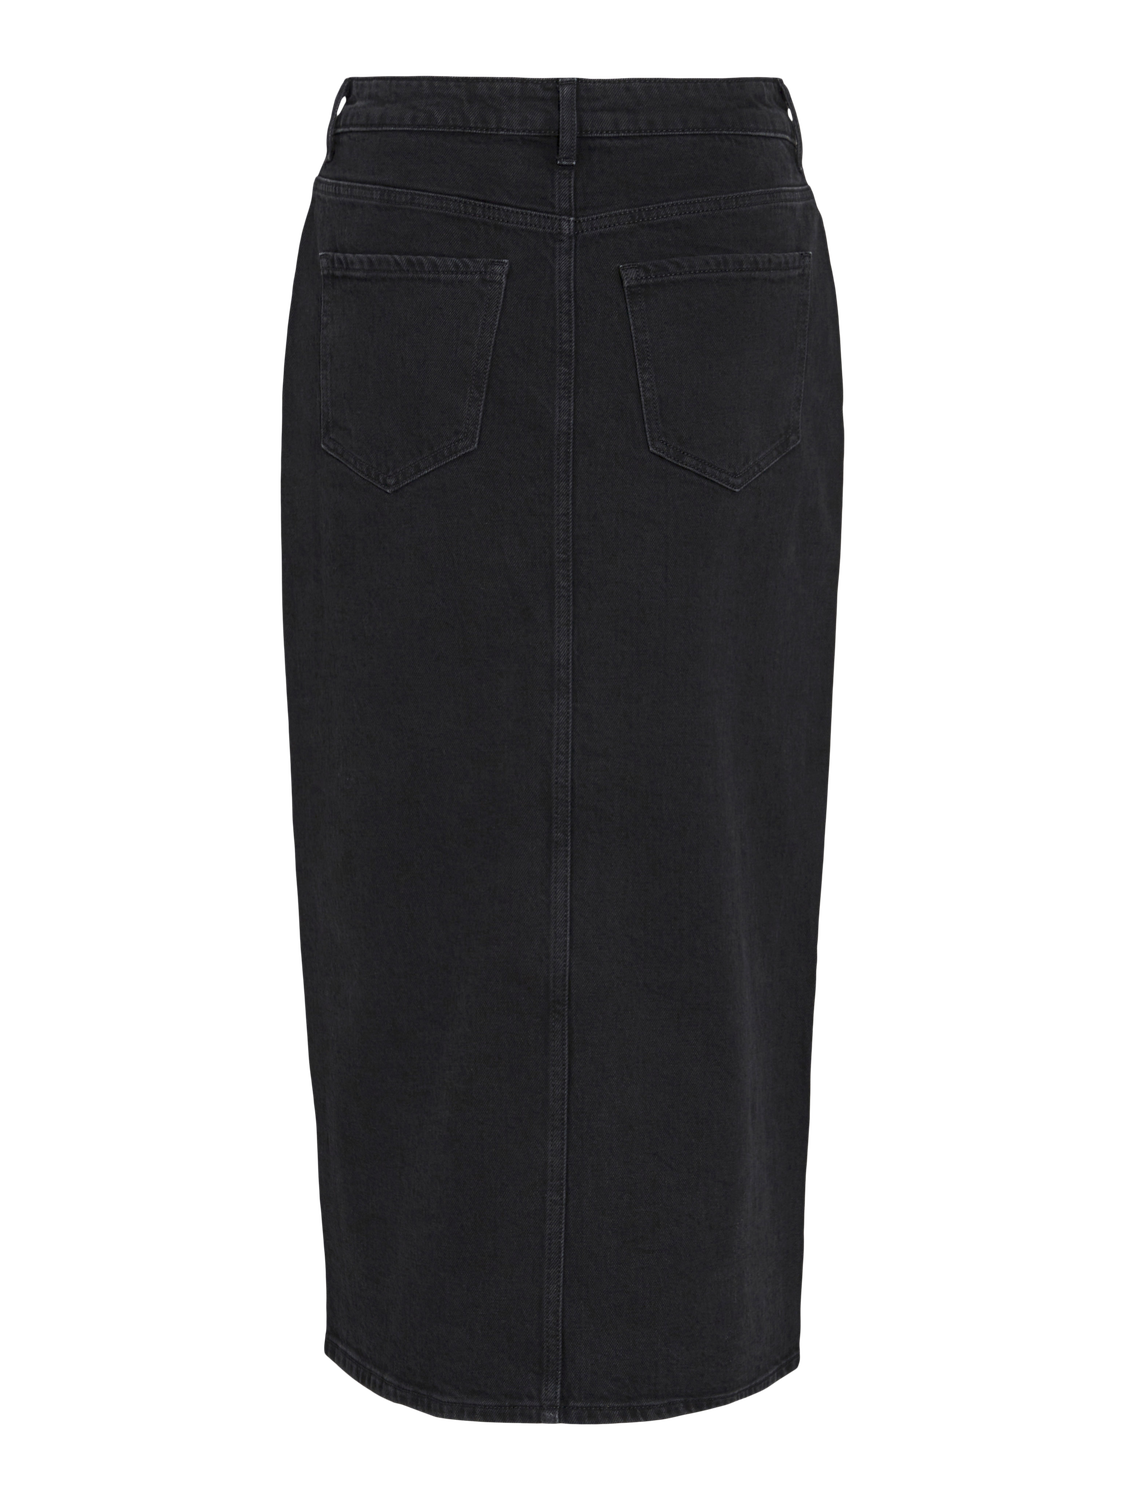 VIJAF Skirt - Black Denim